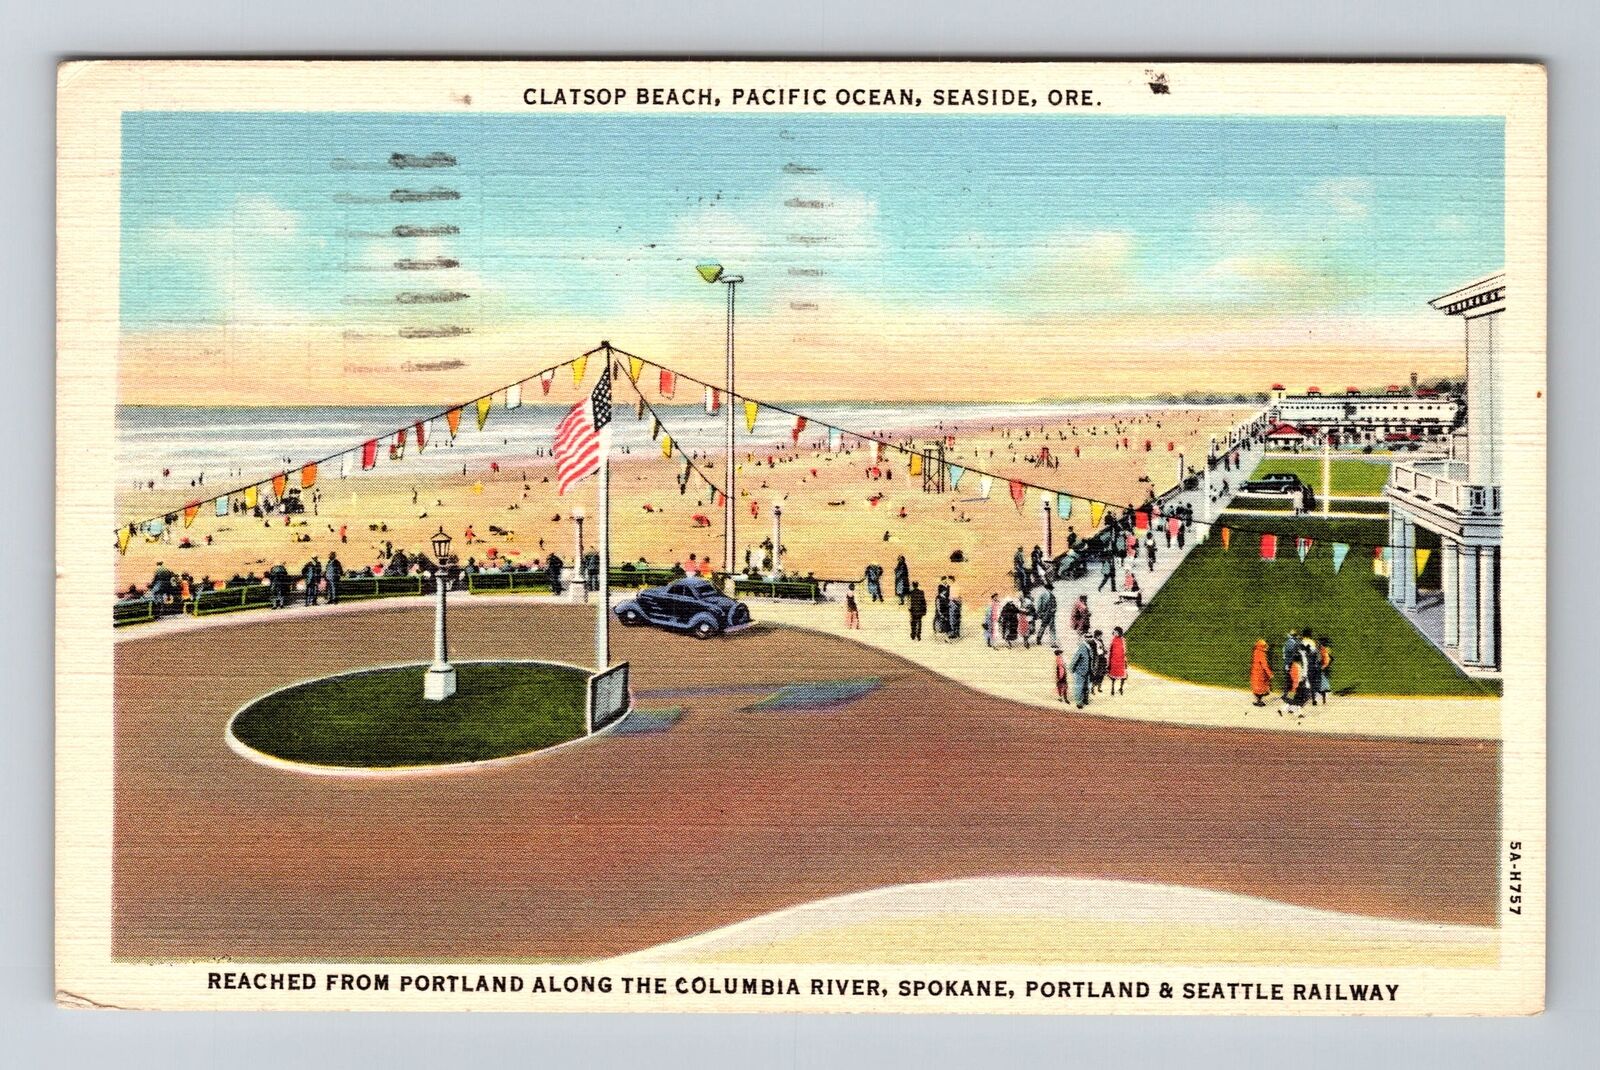 OR-Oregon, Clatsop Beach, Pacific Ocean, c1944, Vintage Postcard